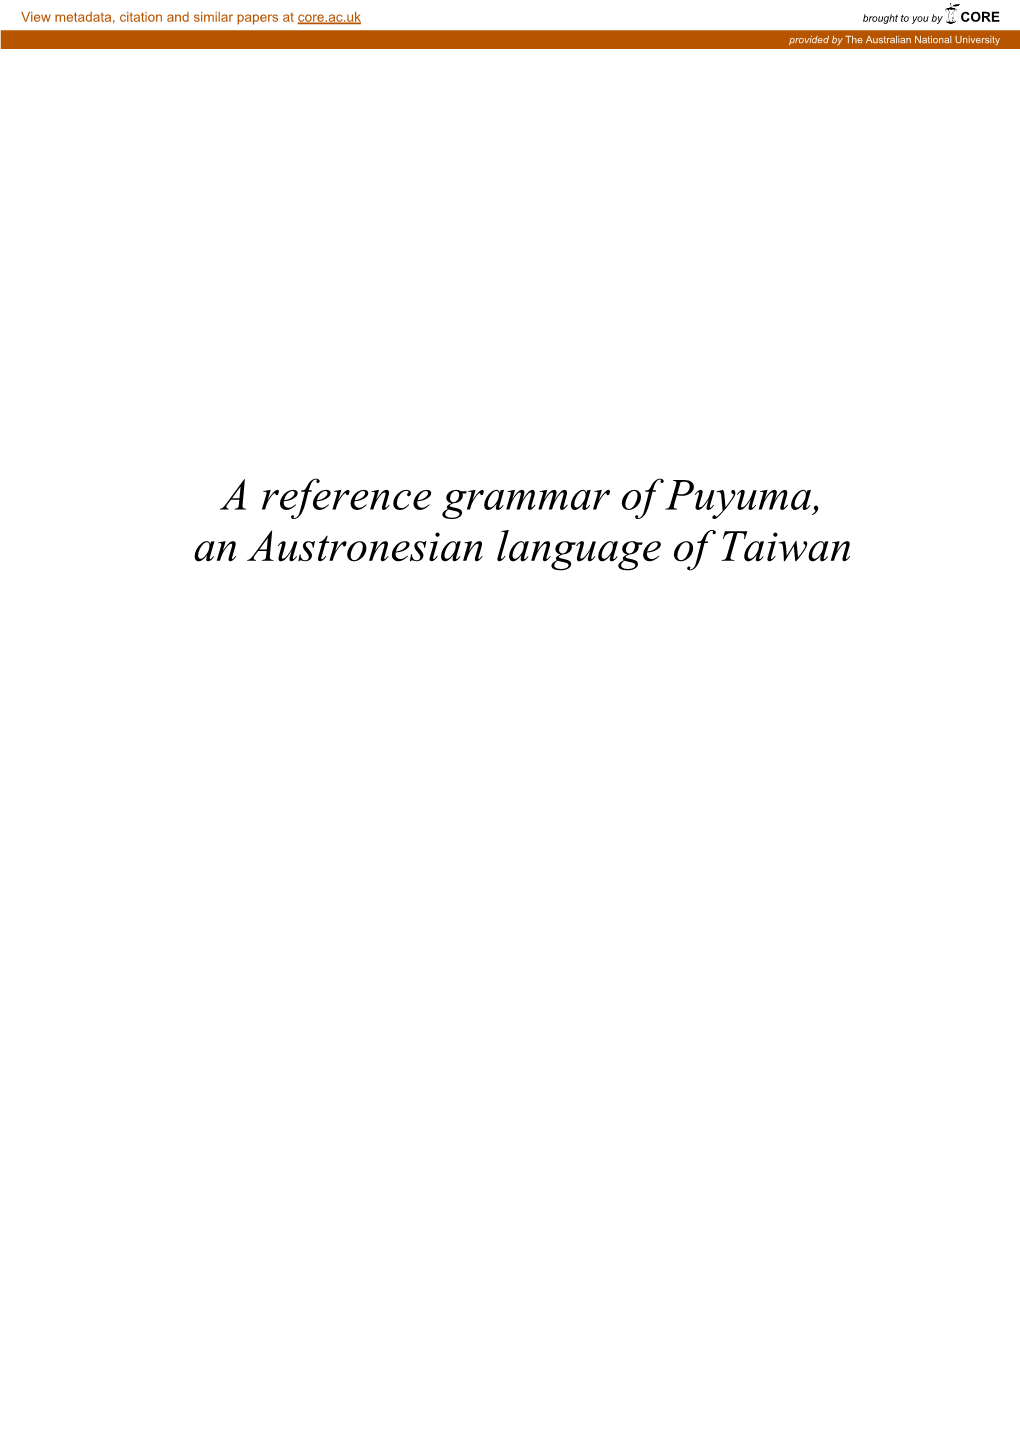 A Reference Grammar of Puyuma, an Austronesian Language of Taiwan